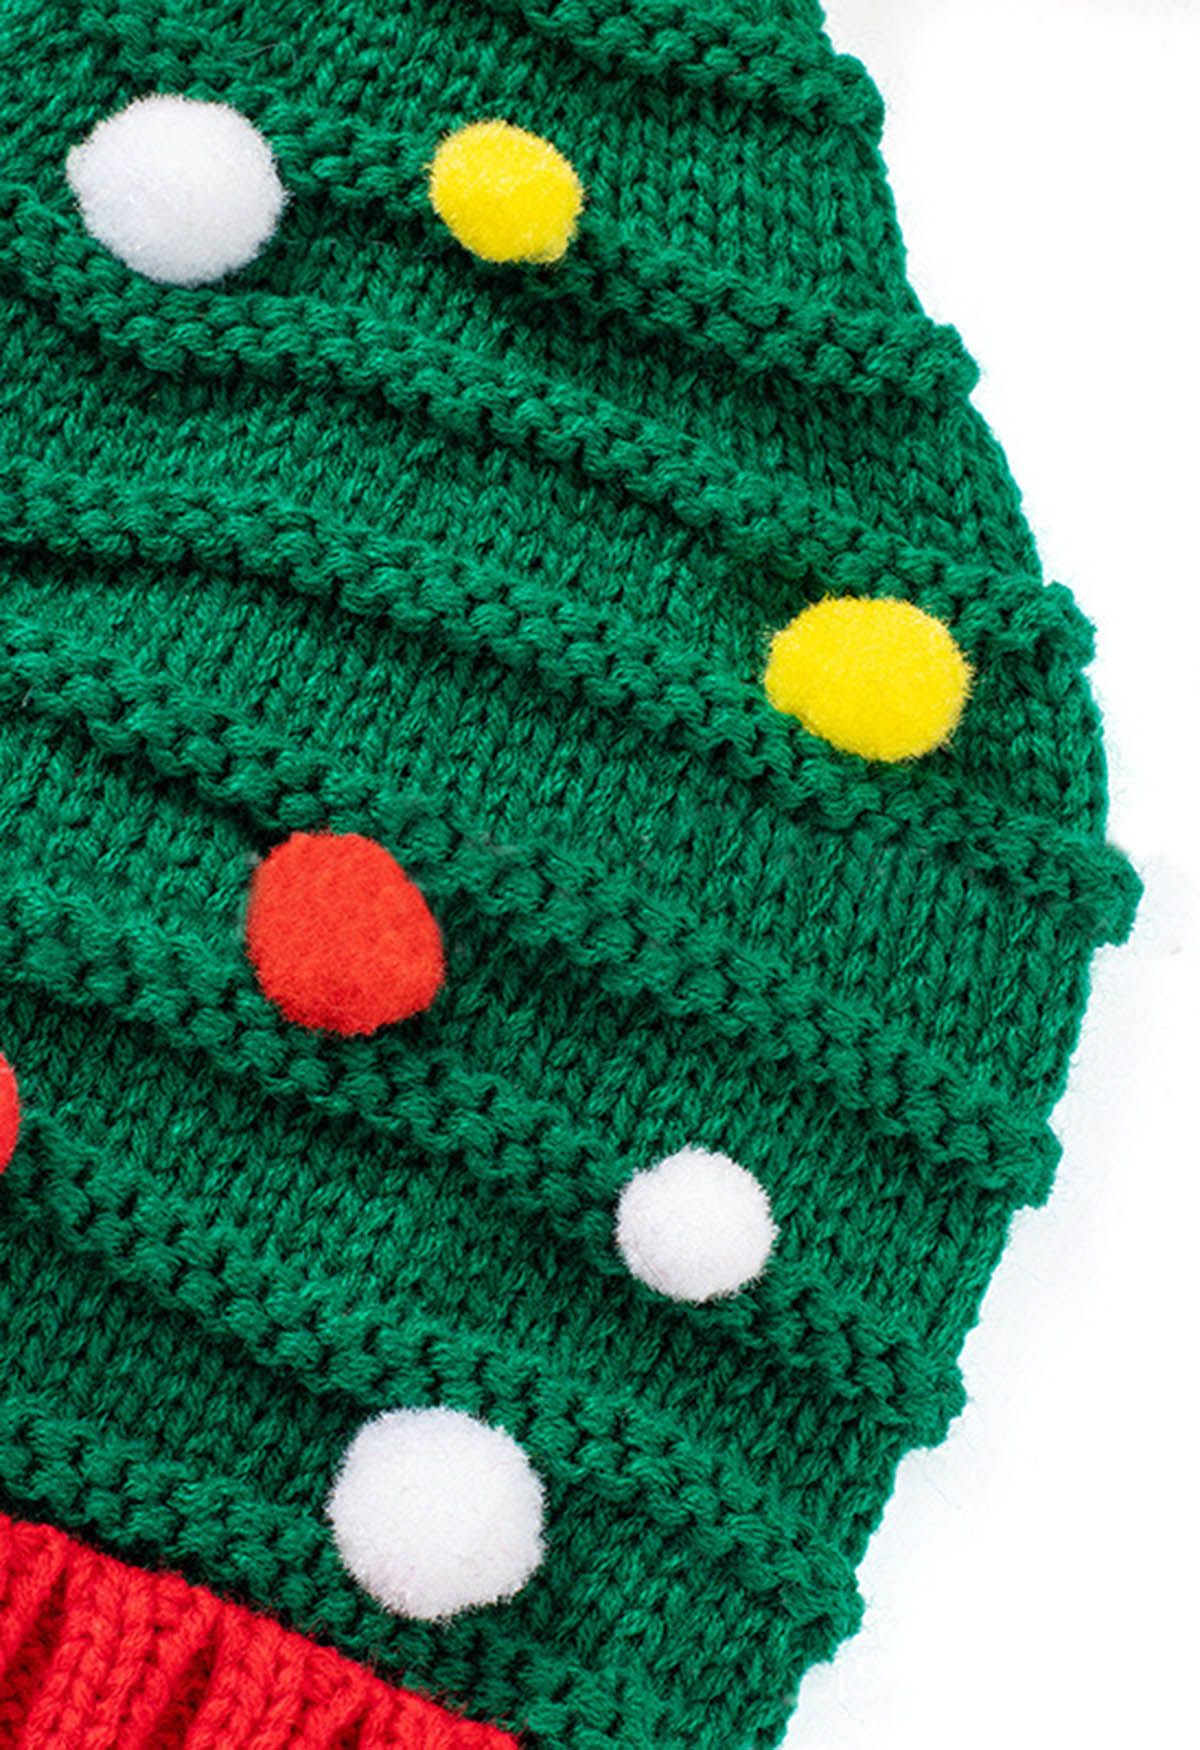 Christmas Tree Pom-Pom Beanie Hat